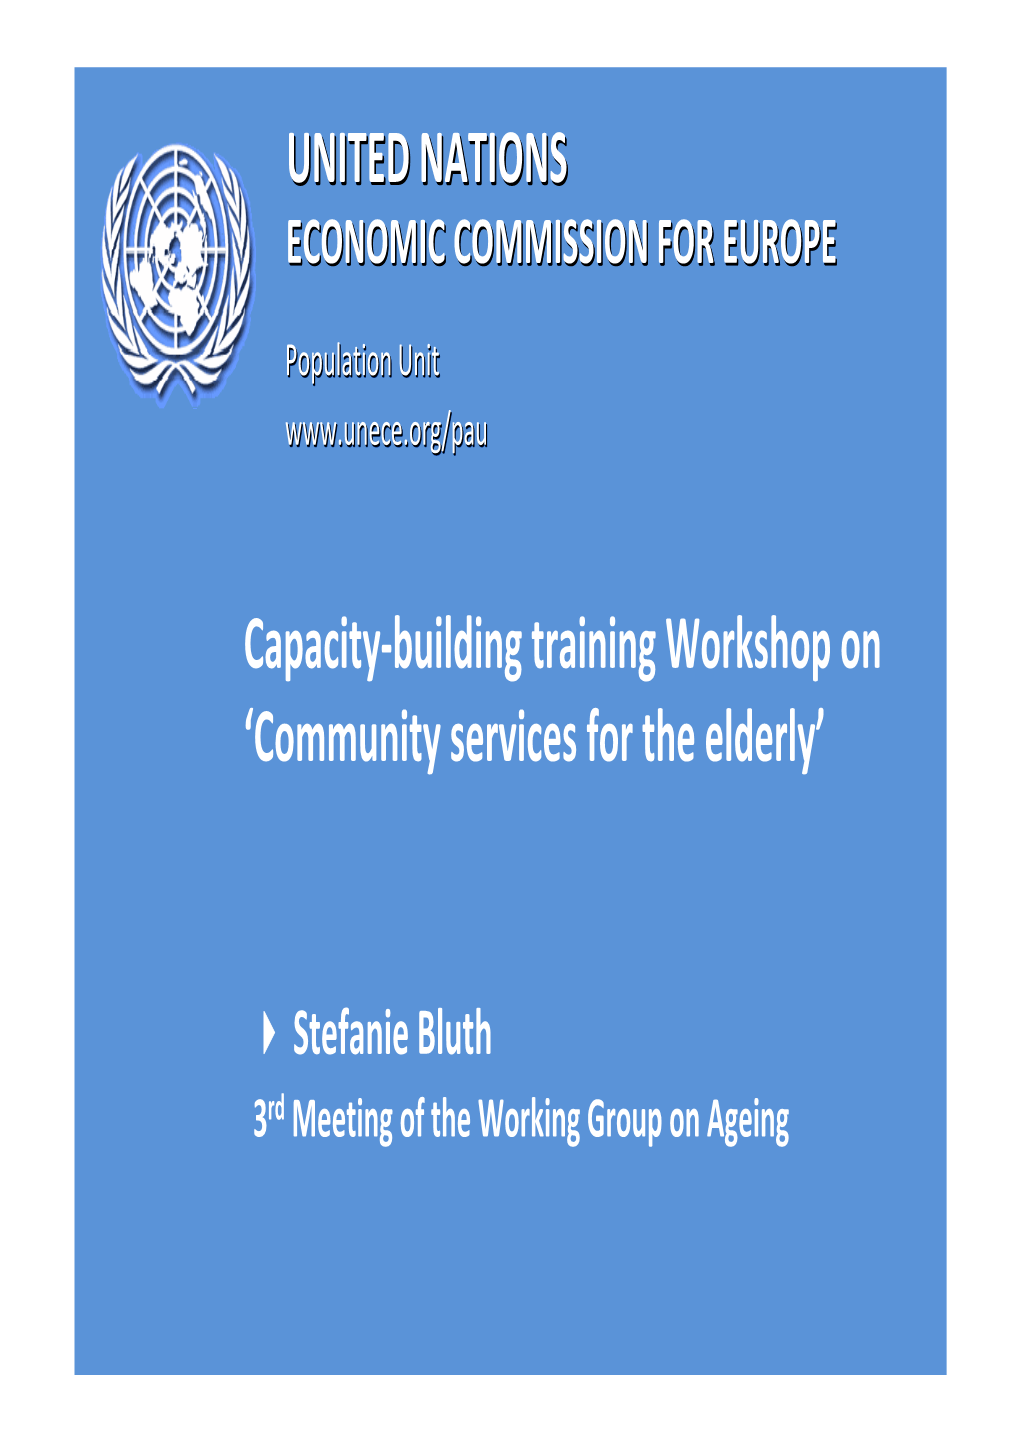 UNITED NATIONS Capacity-Building Training Workshop On